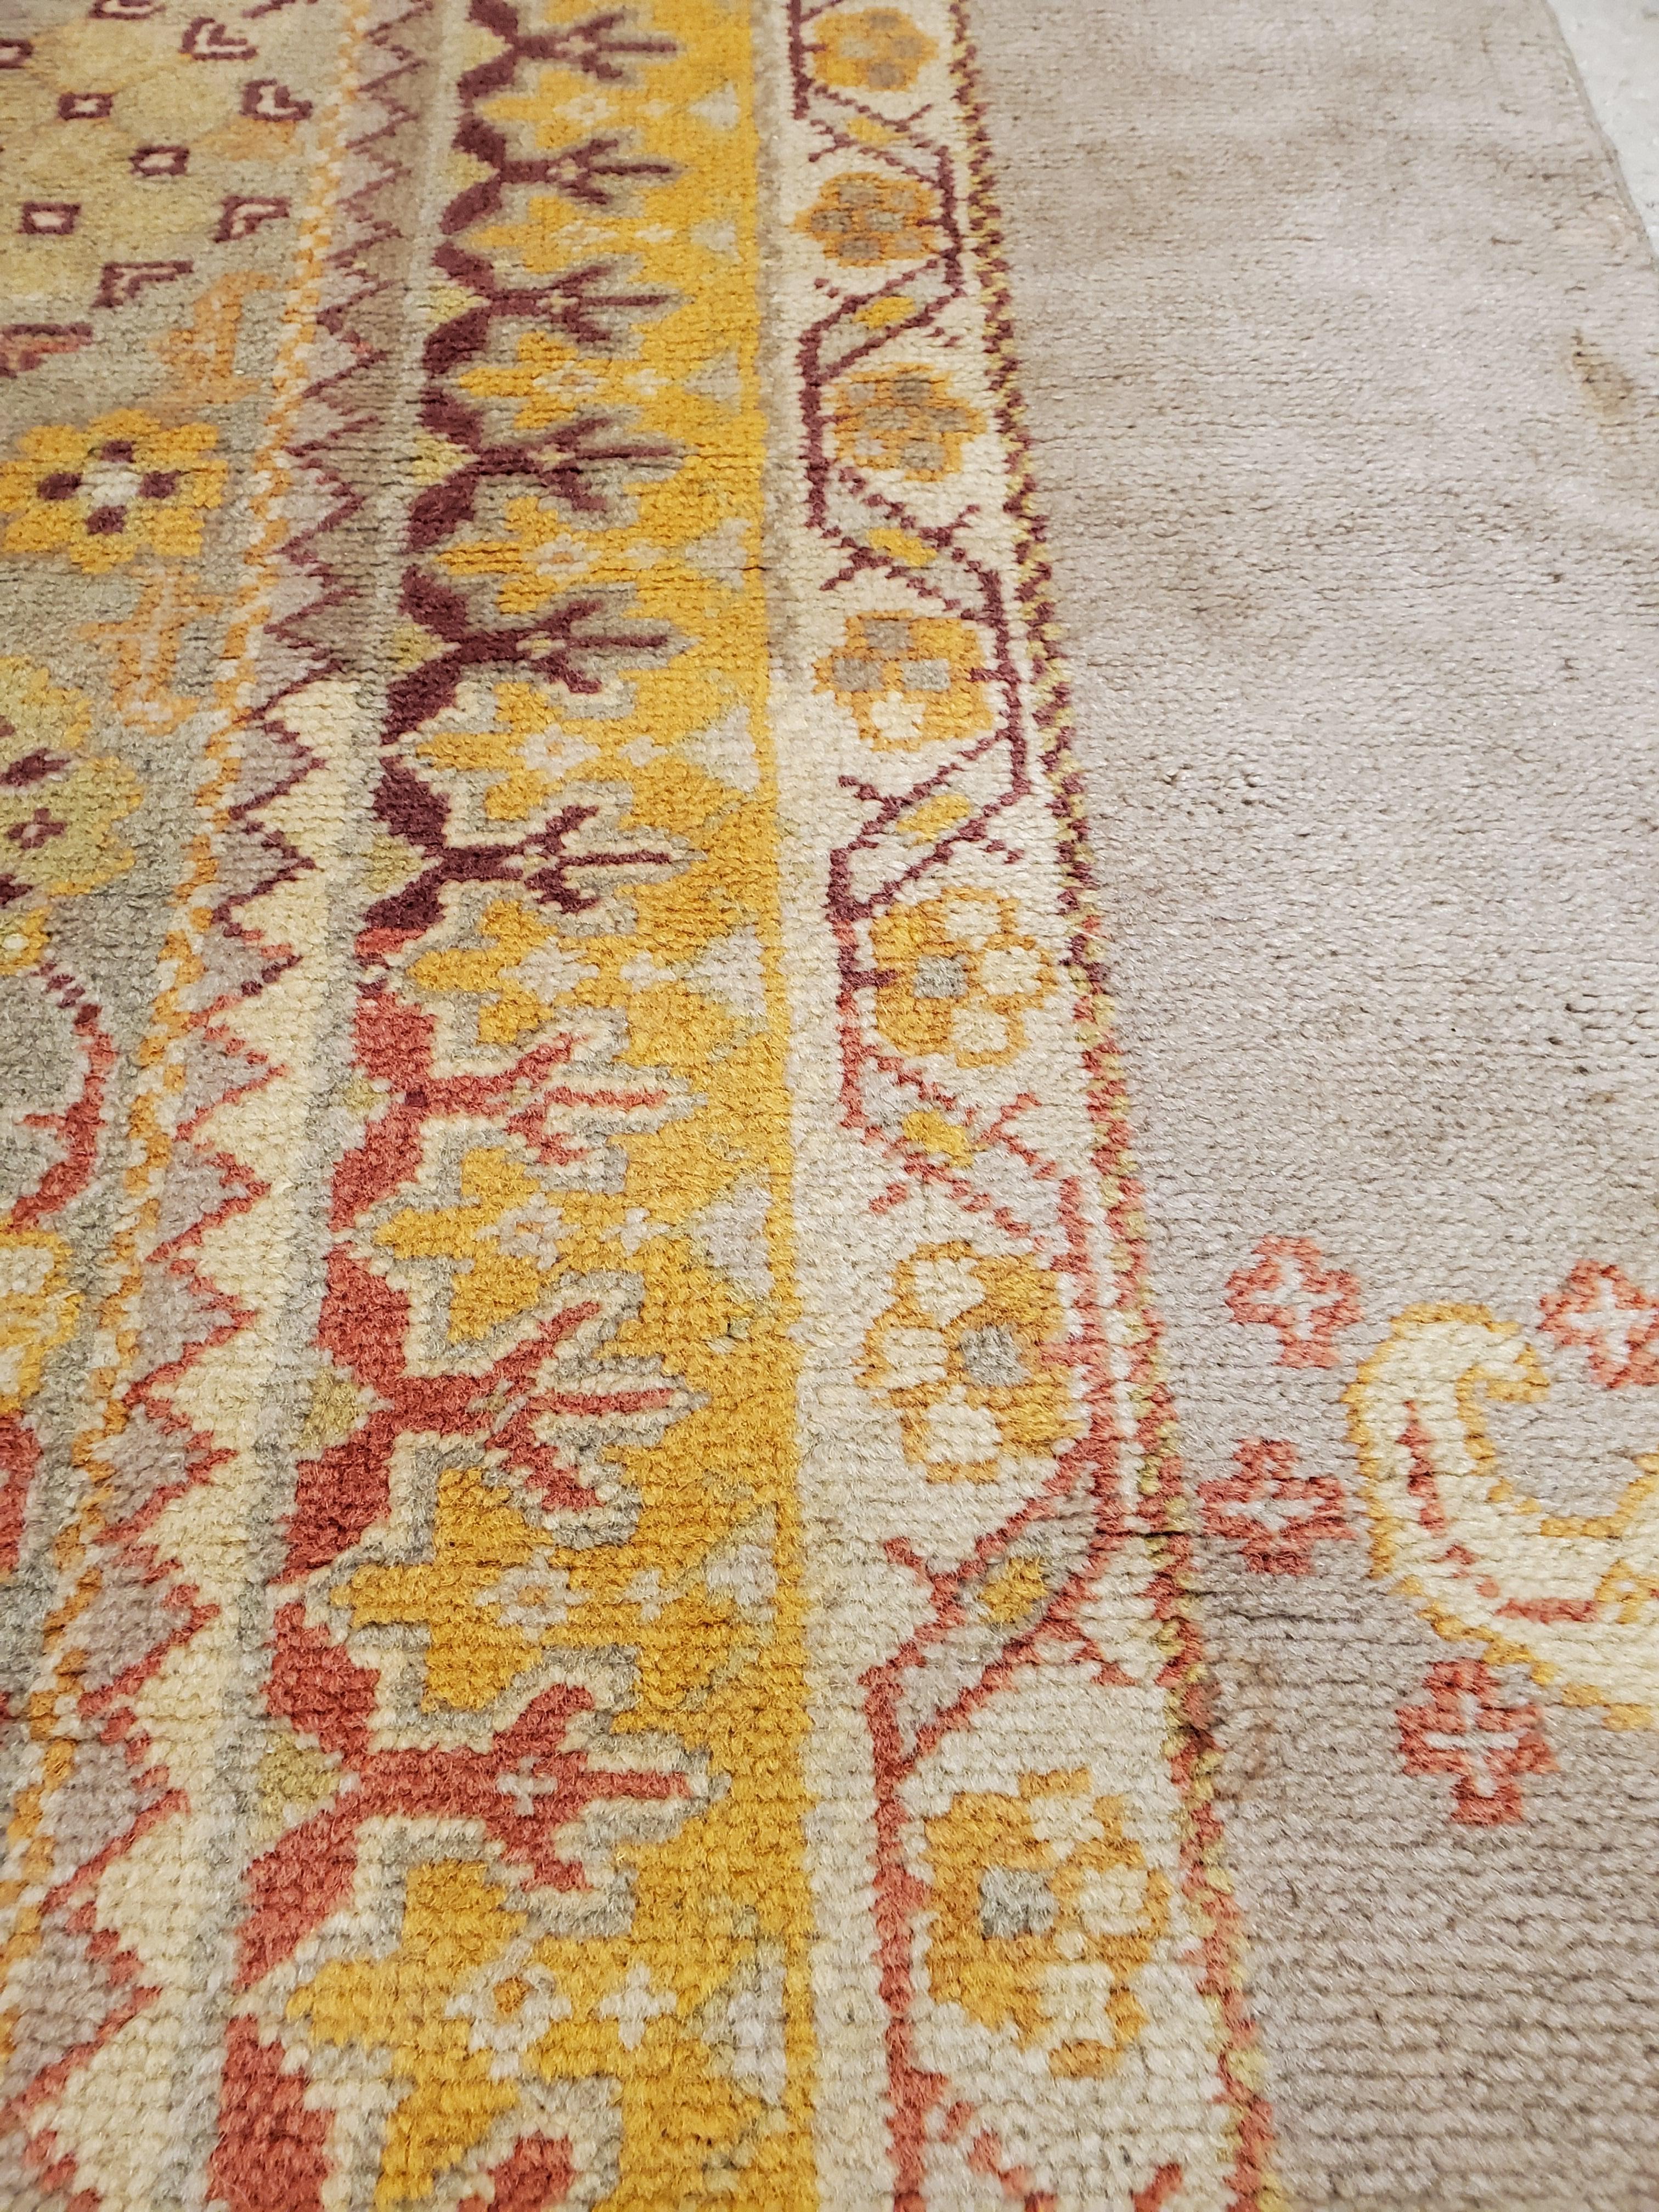 Antique Turkish Oushak Carpet, Handmade Oriental Rug, Gray, Taupe, Saffron Coral 7